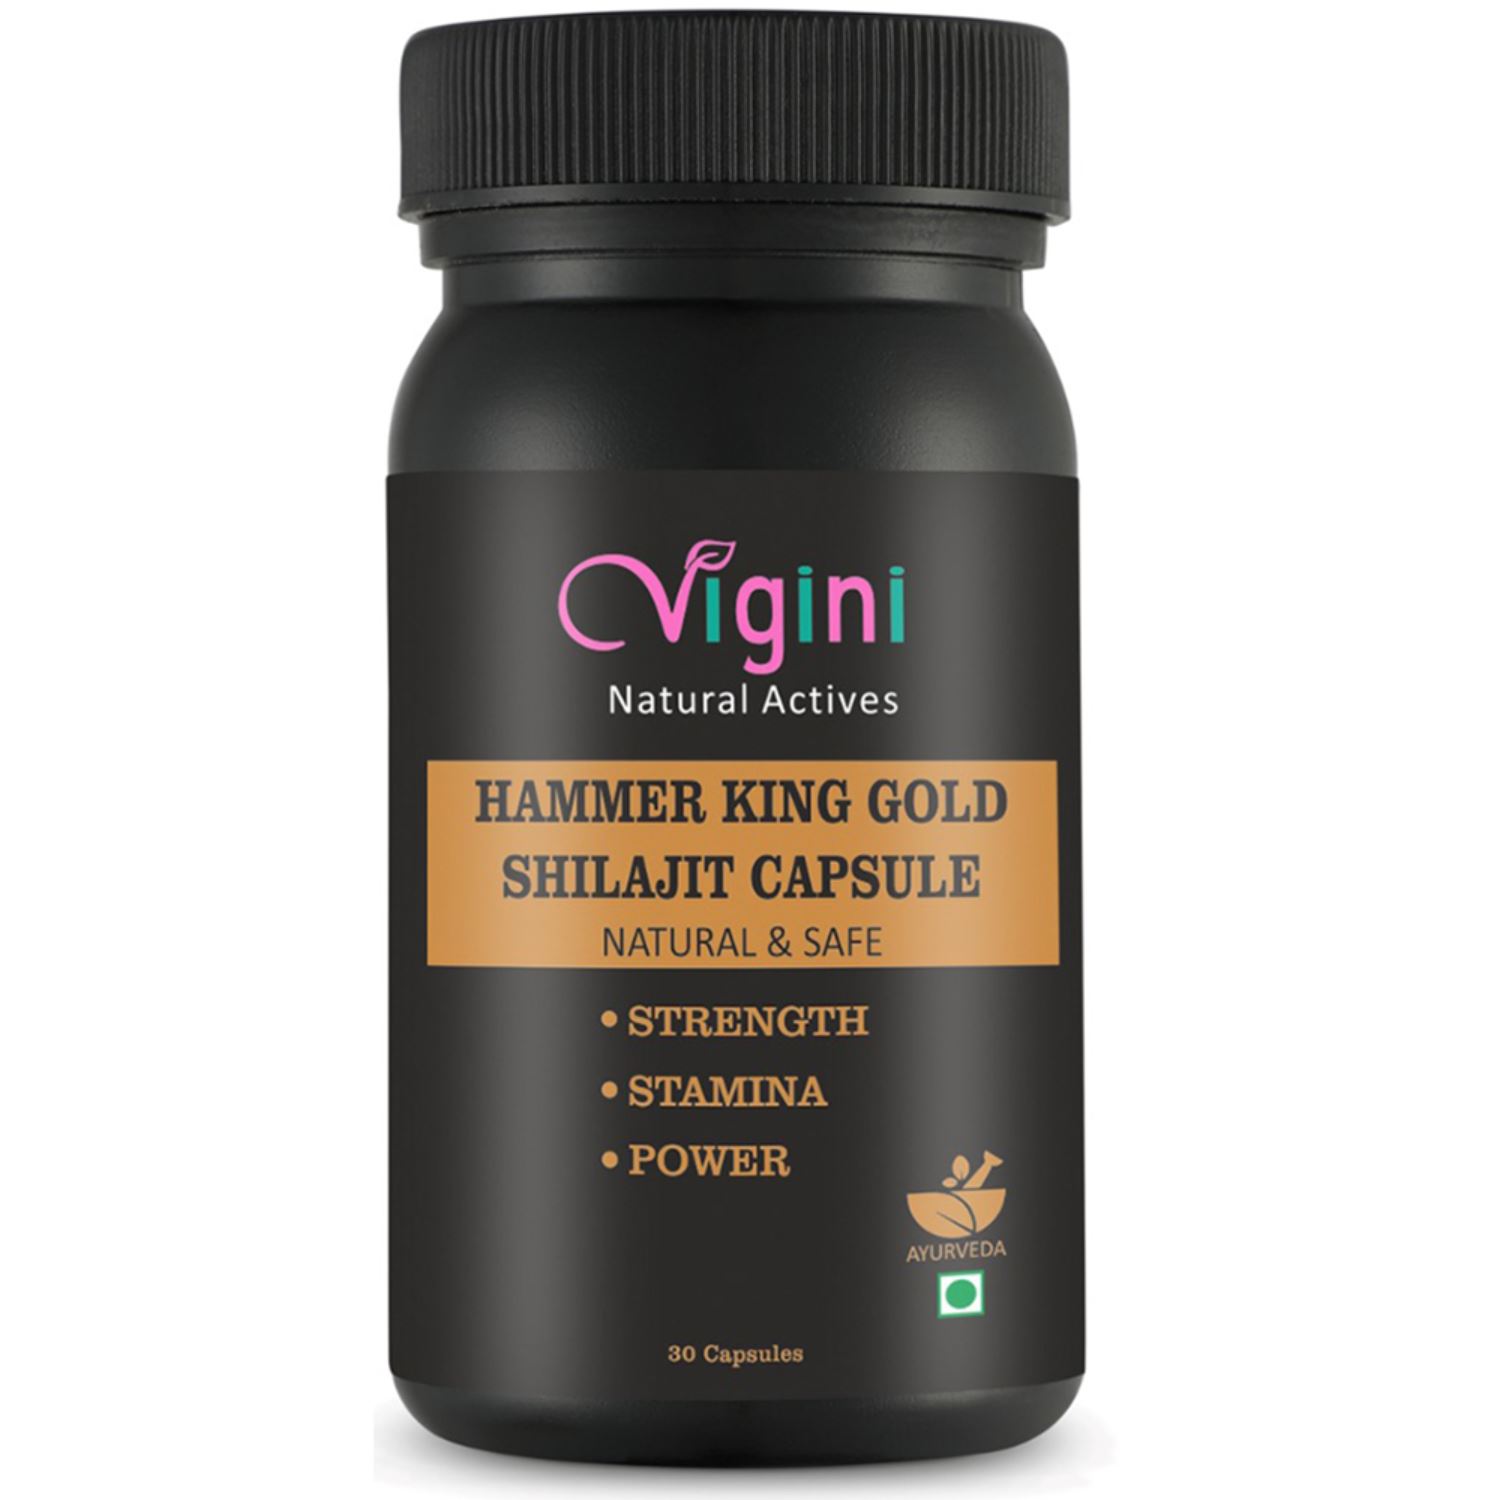 Vigini Hammer King Gold Shilajit Capsule Increase Stamina Power Strength Booster Capsules